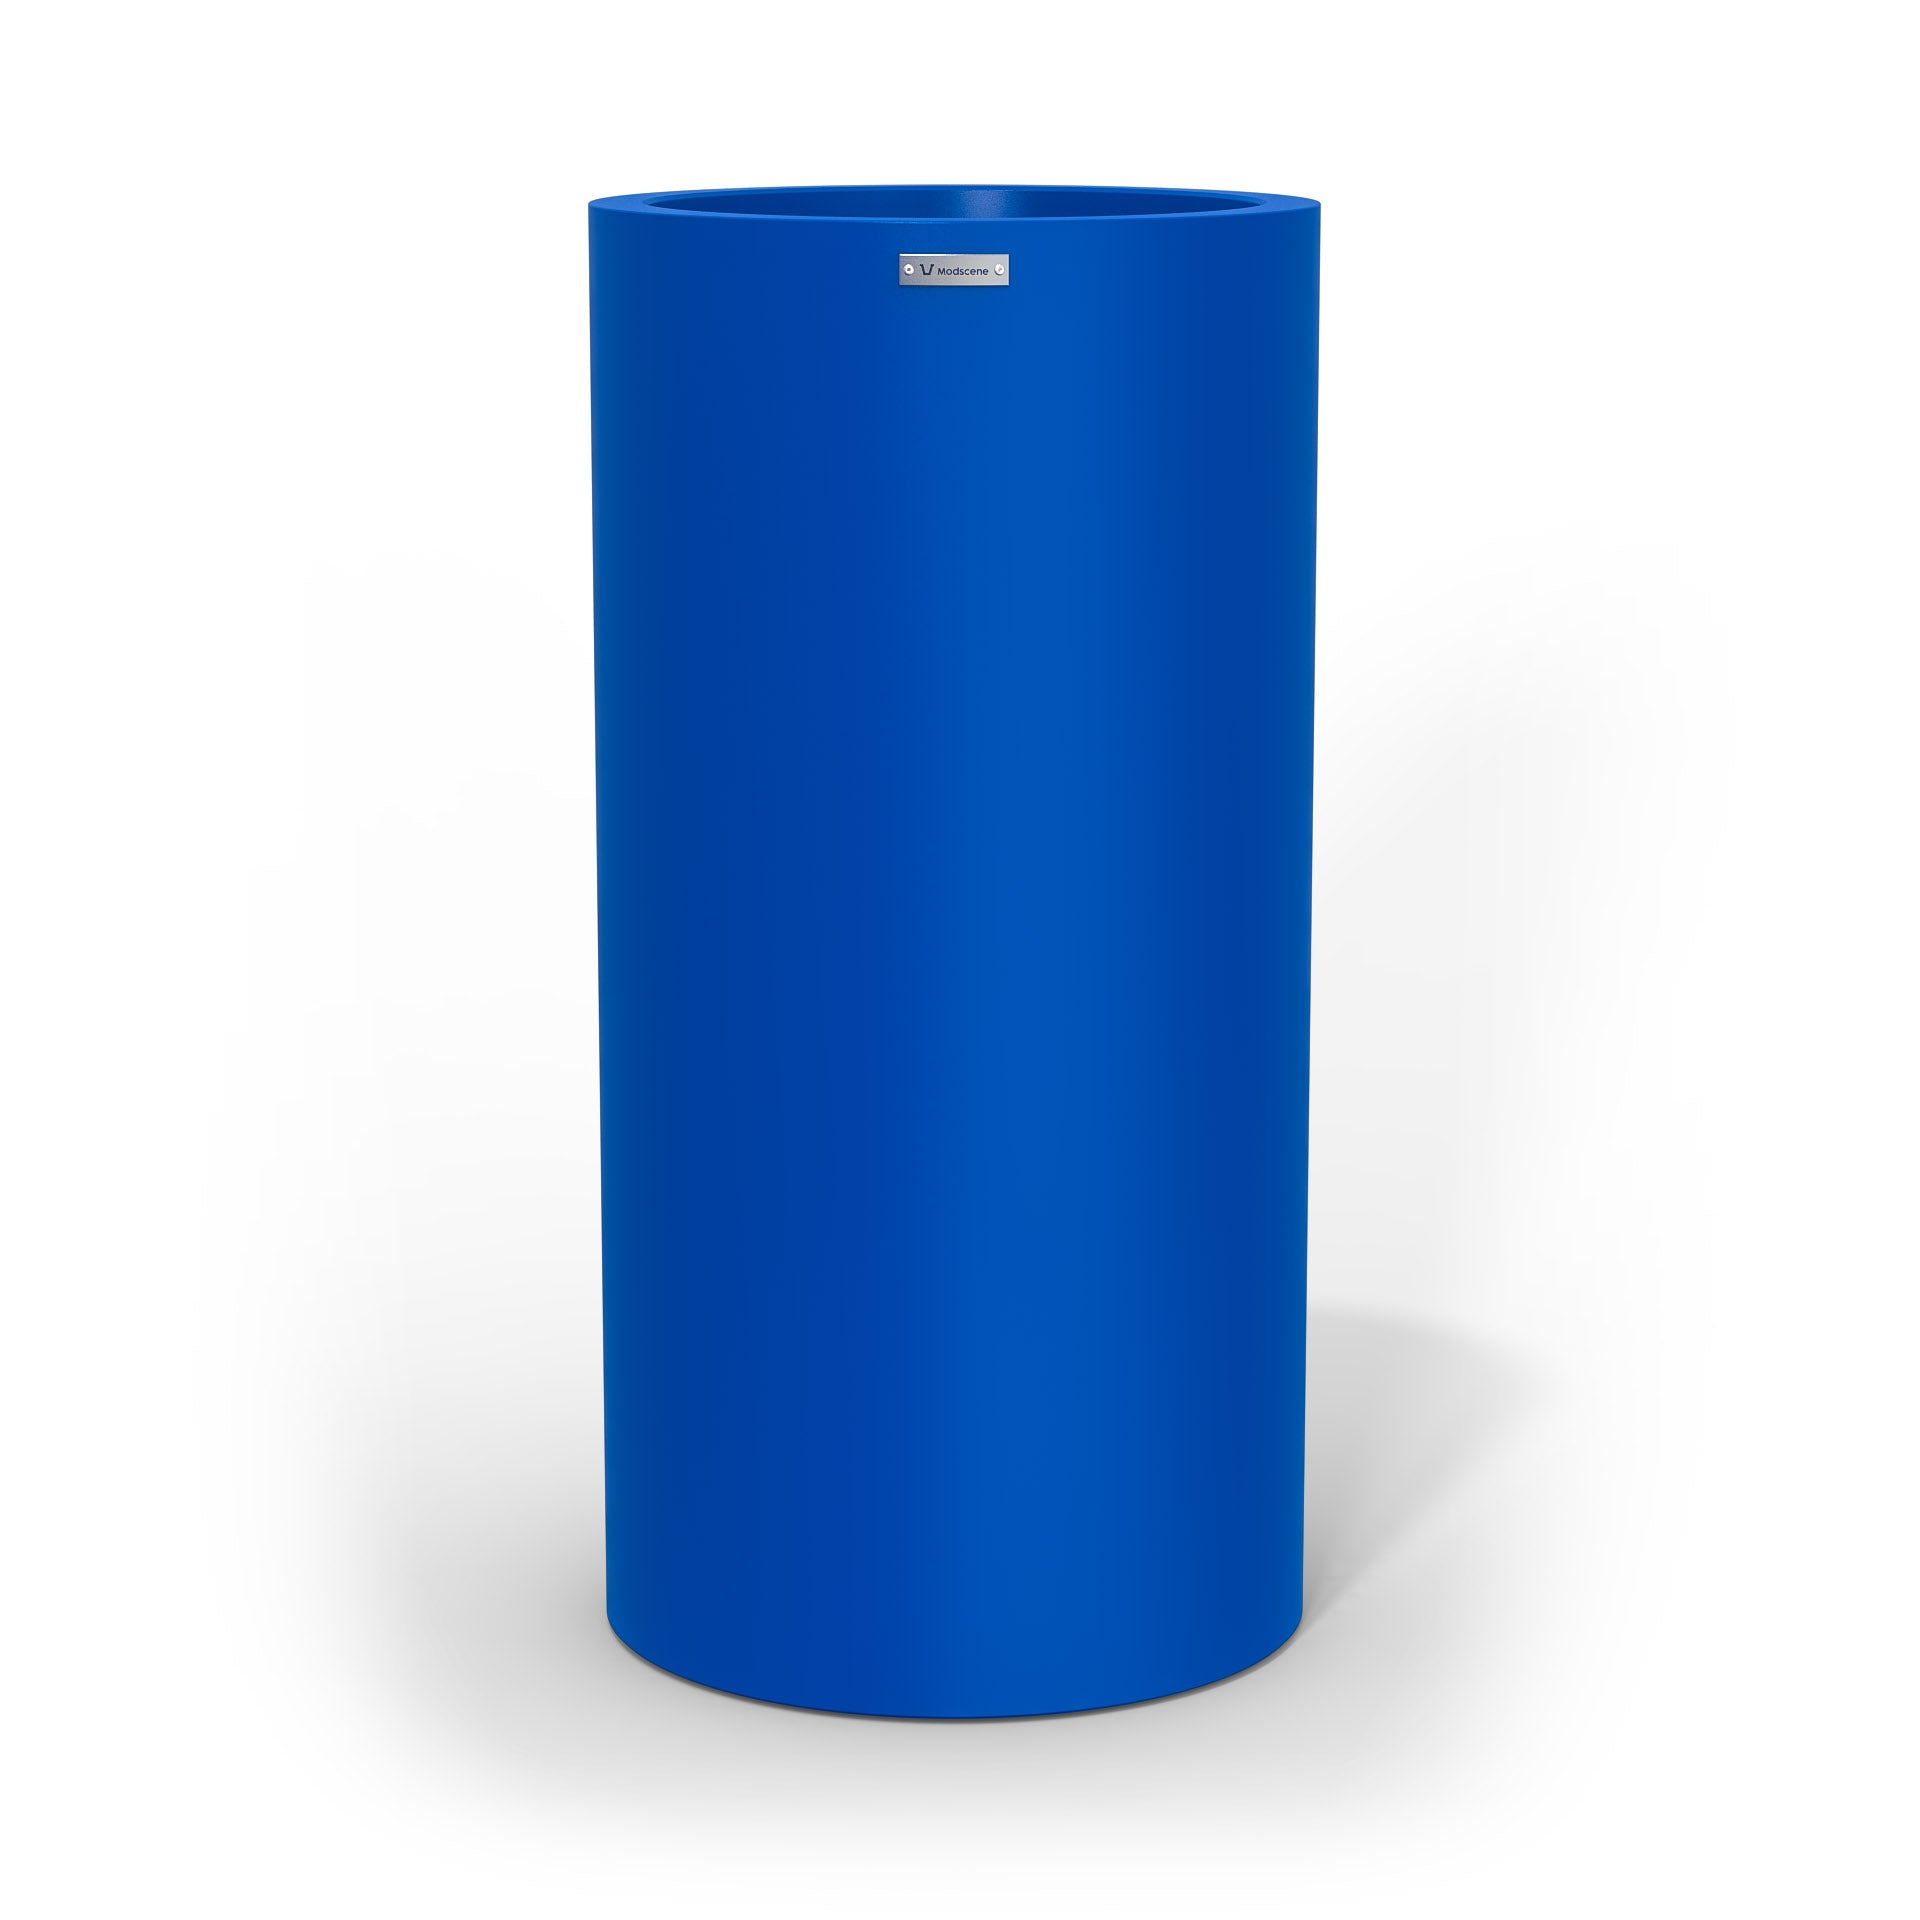 A tall cylinder planter pot in a deep blue colour made by Modscene NZ.